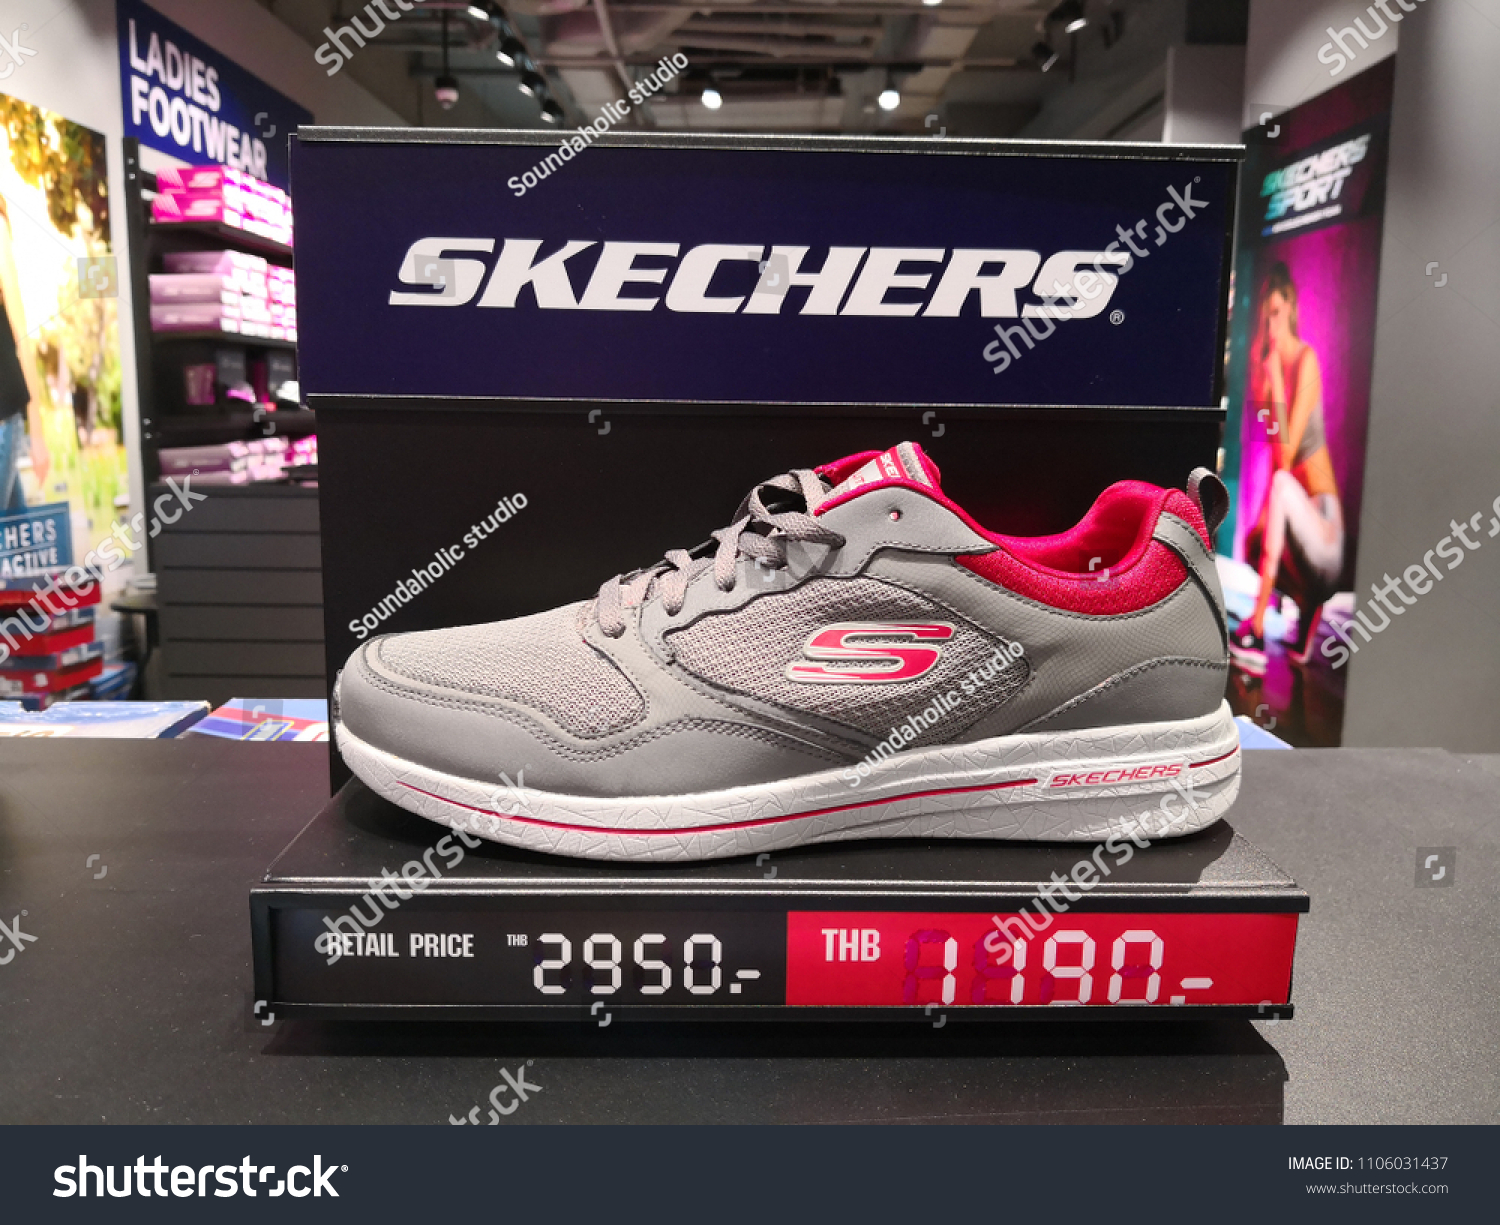 skechers shoes 2018